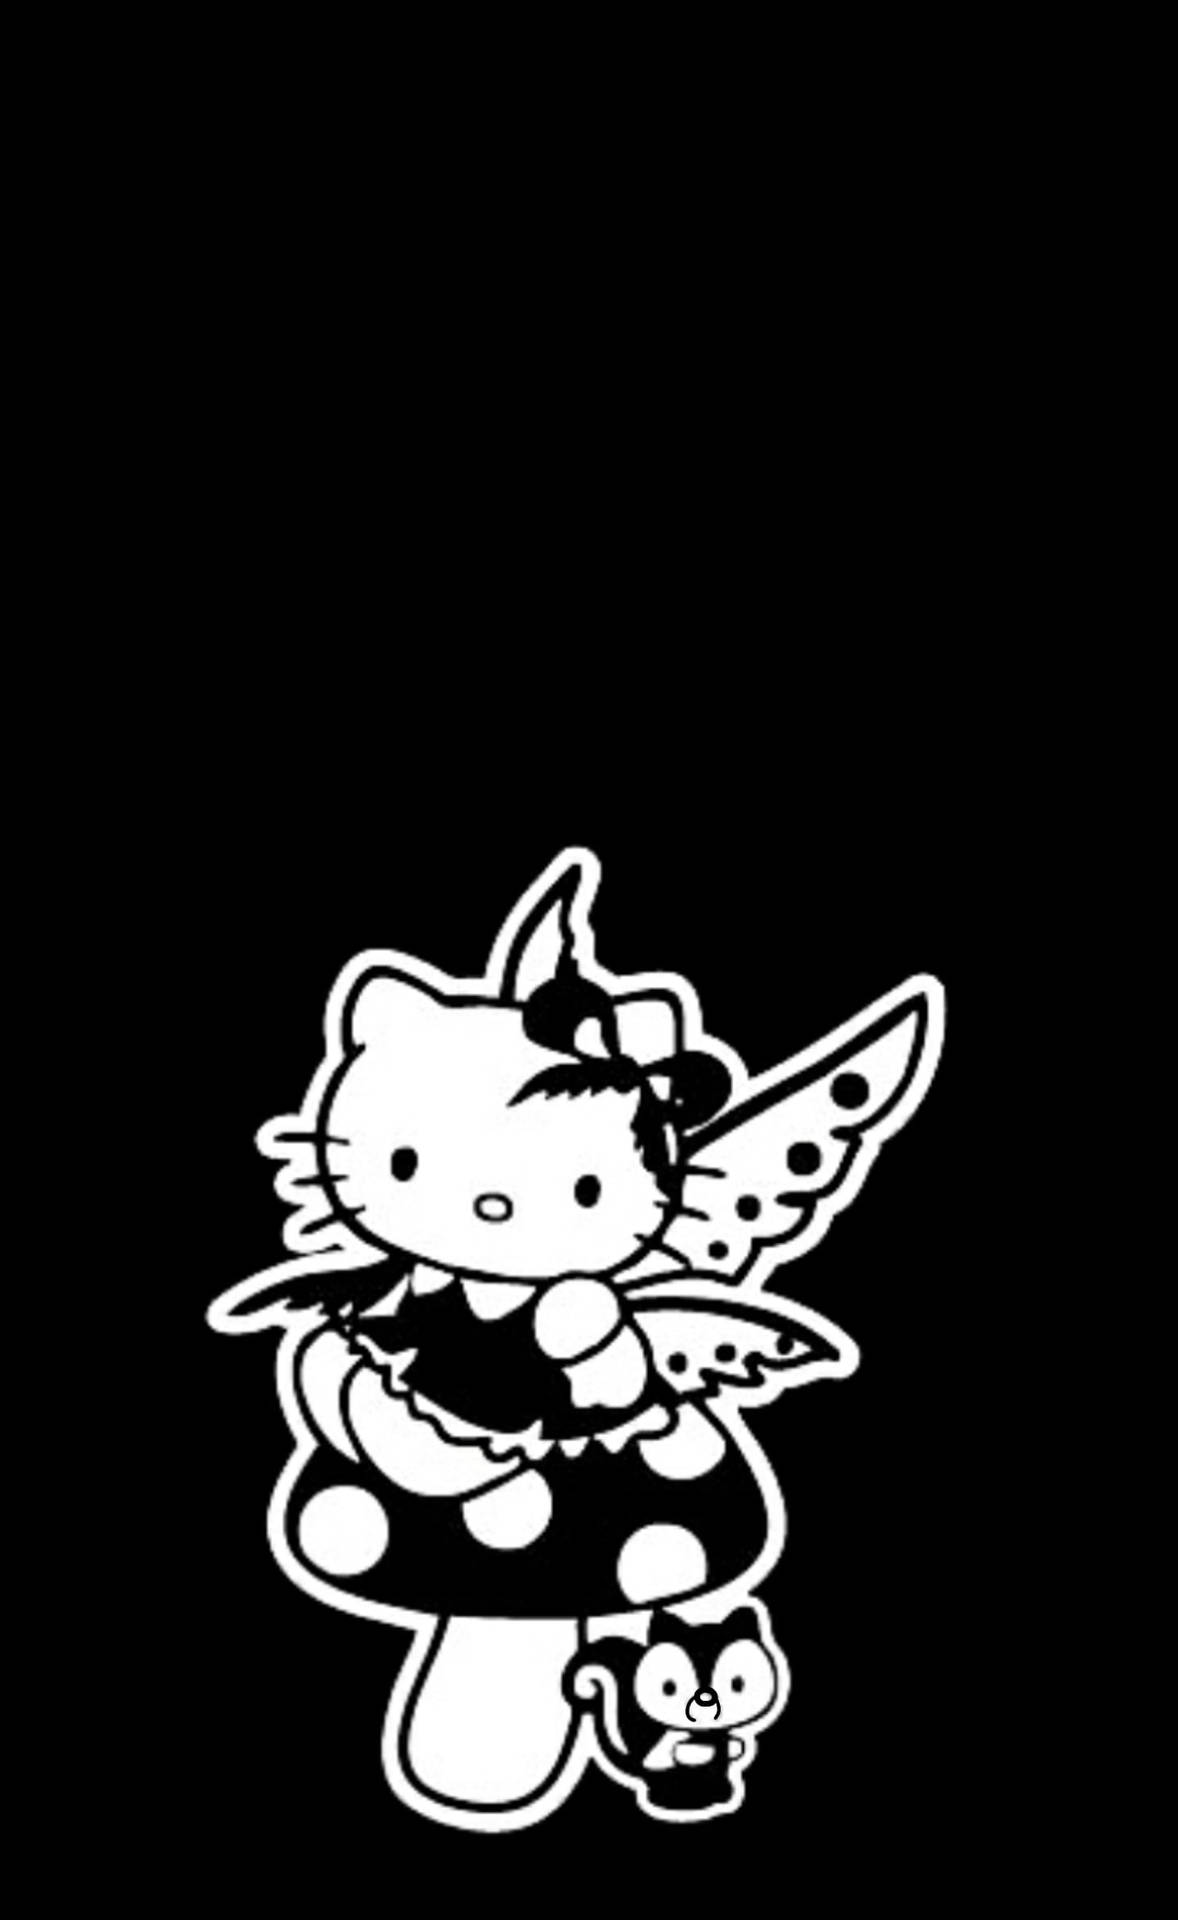 Black Hello Kitty In Fairy Costume